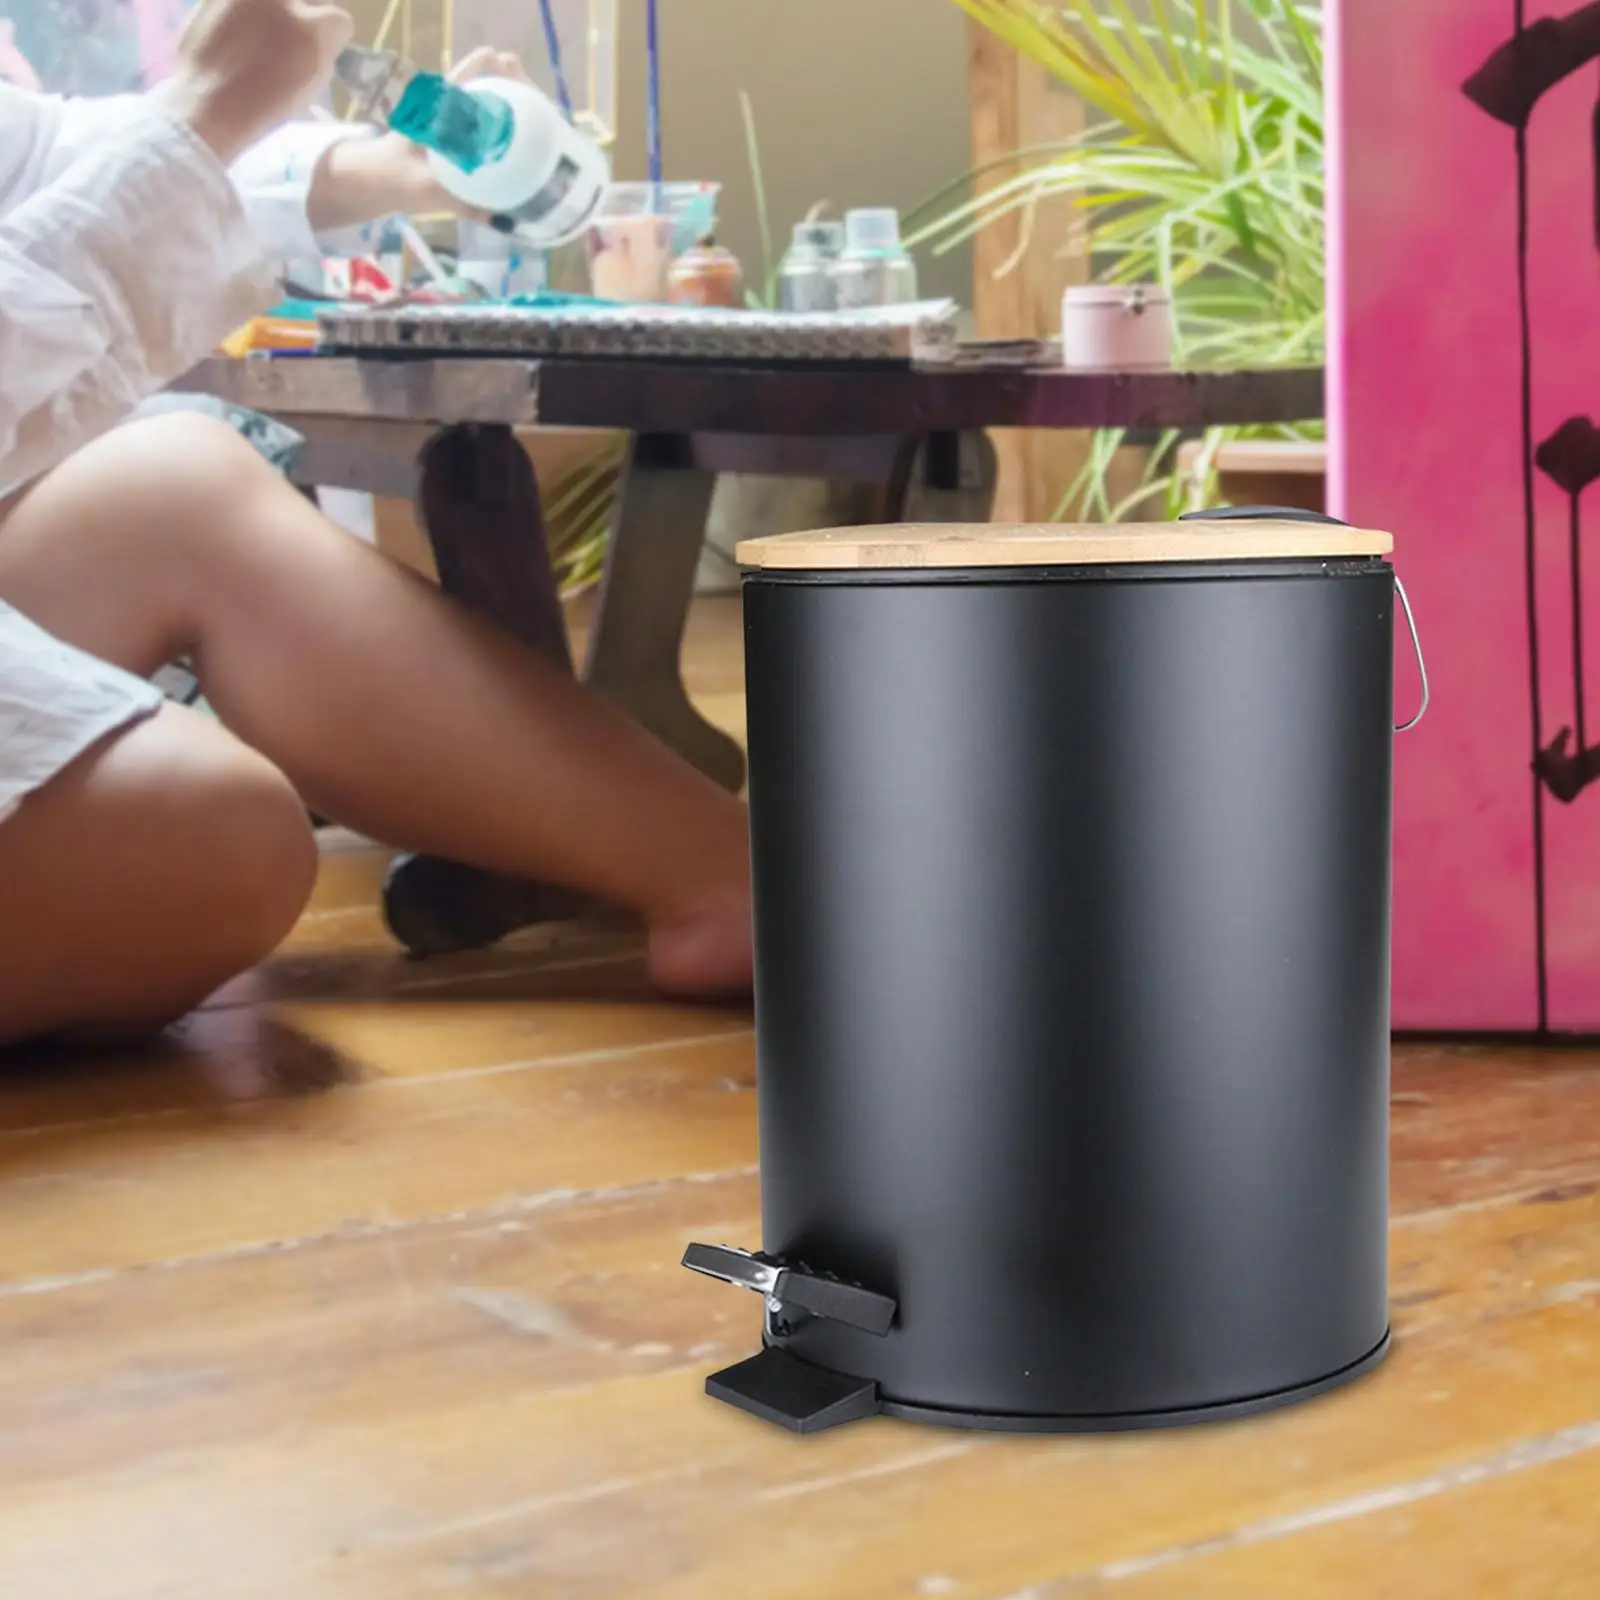 Wooden Flip Step Trash Can Garbage Rubbish Bin Waste Container Organizer Bathroom Kitchen Living Room Office Decoration